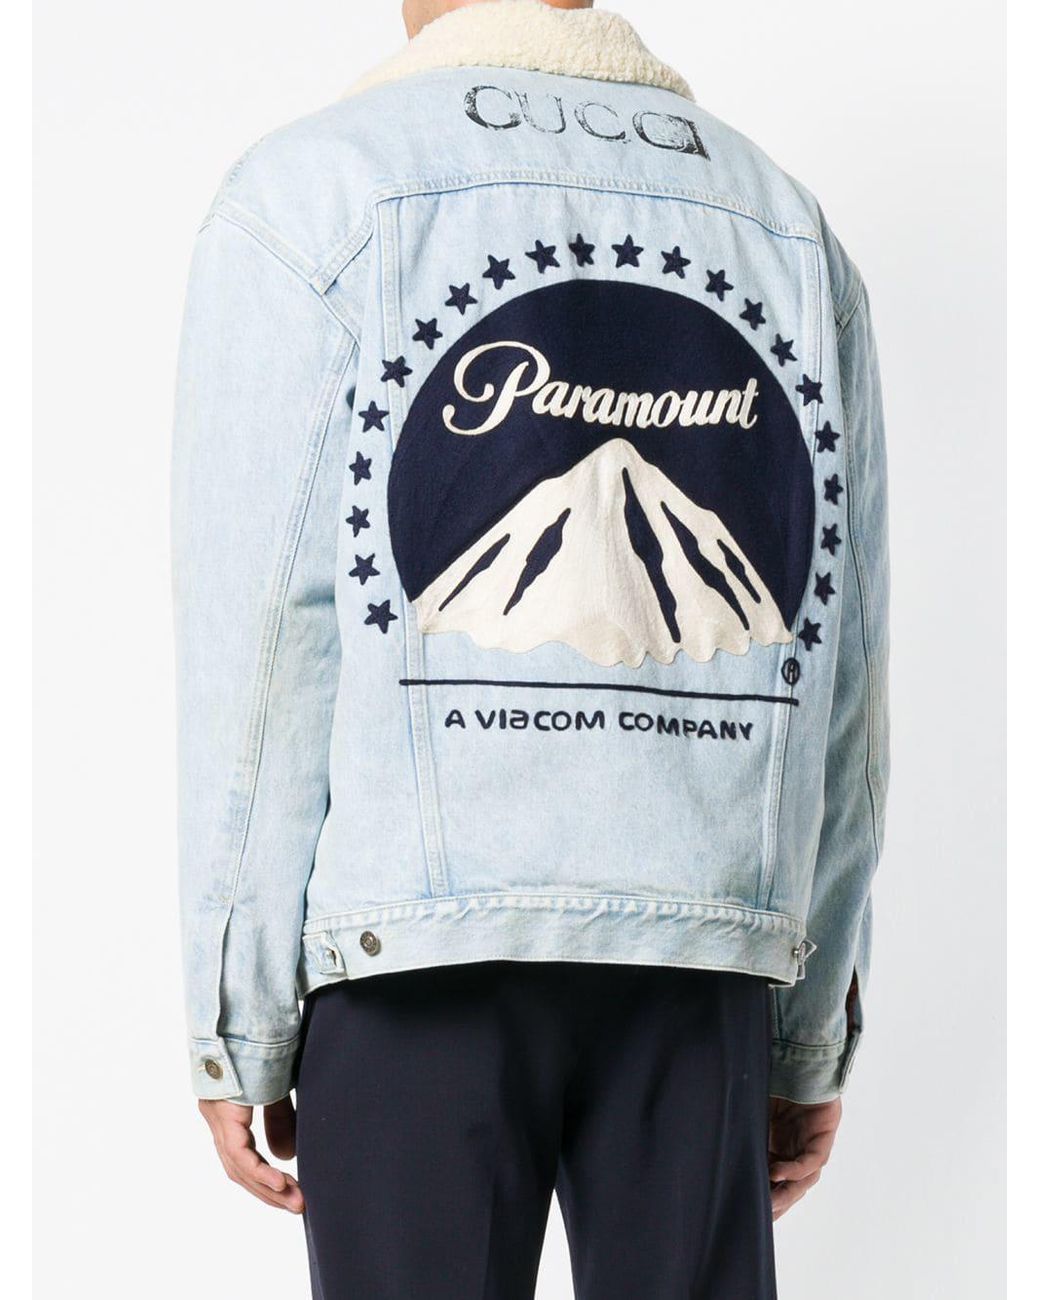 Gucci Paramount Print Denim Jacket in Blue for Men | Lyst UK